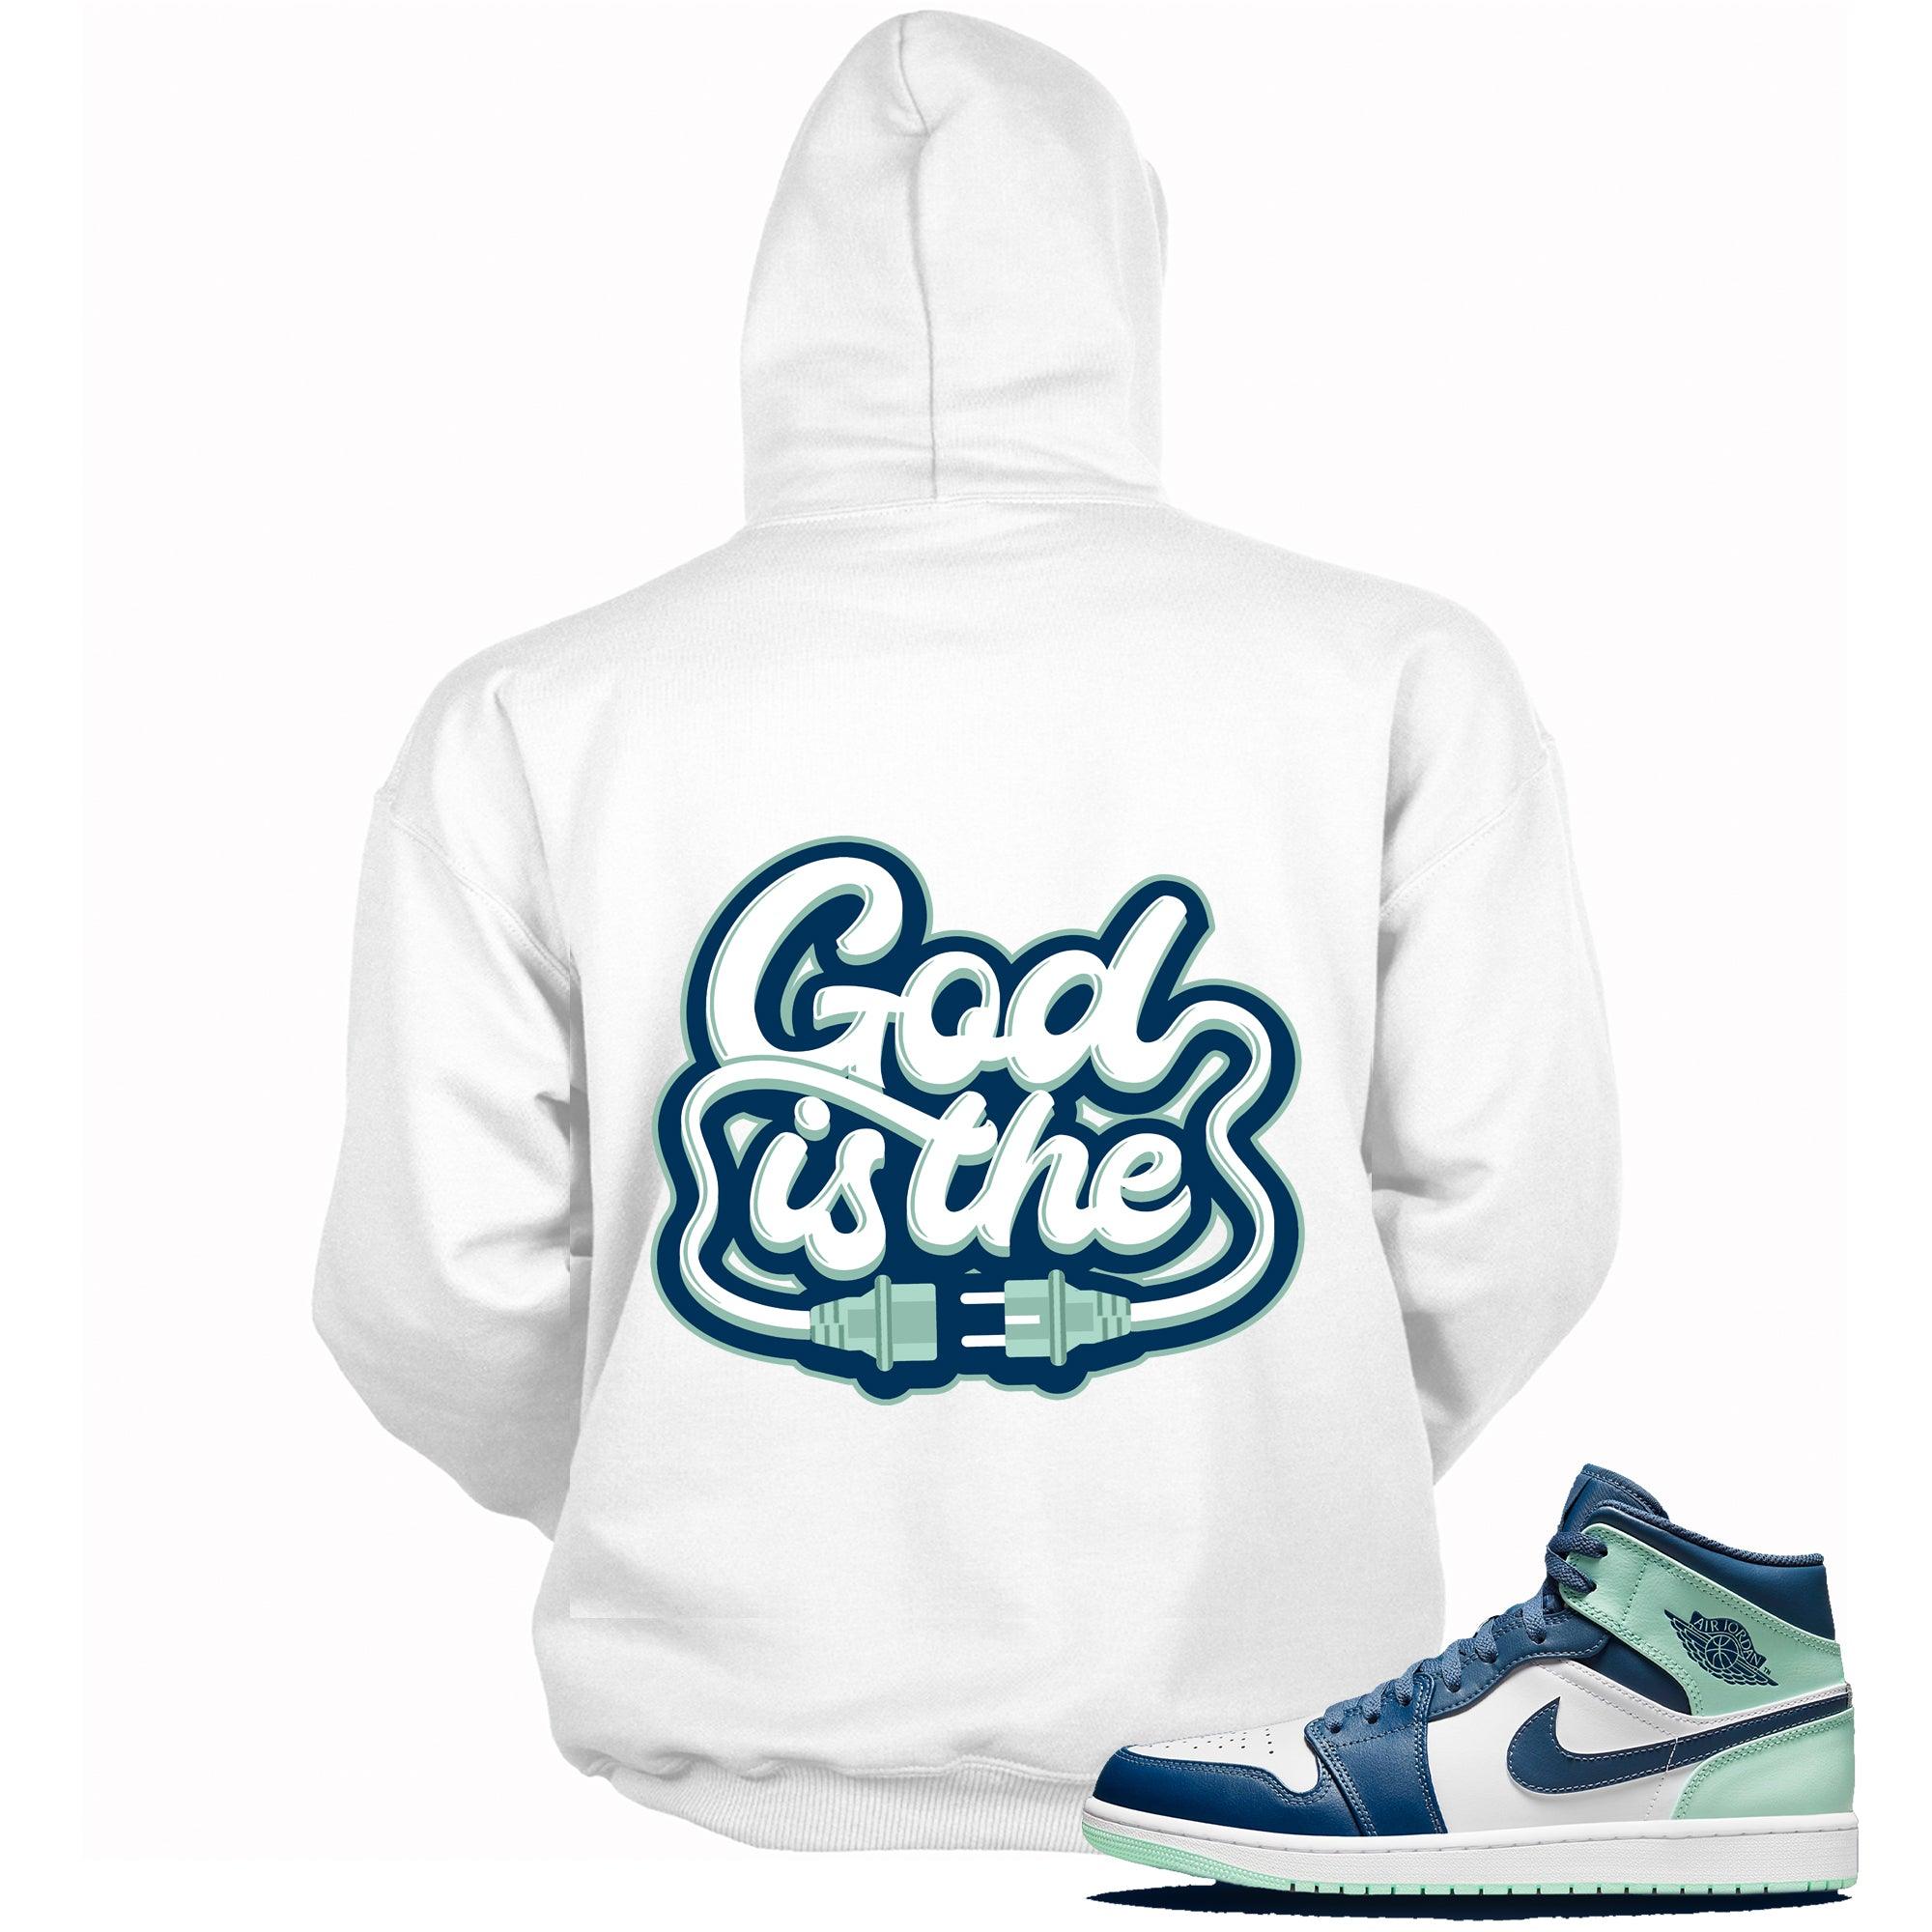 God Is The Plug Sneaker Sweatshirt AJ 1 Mid Mystic Navy Mint Foam photo